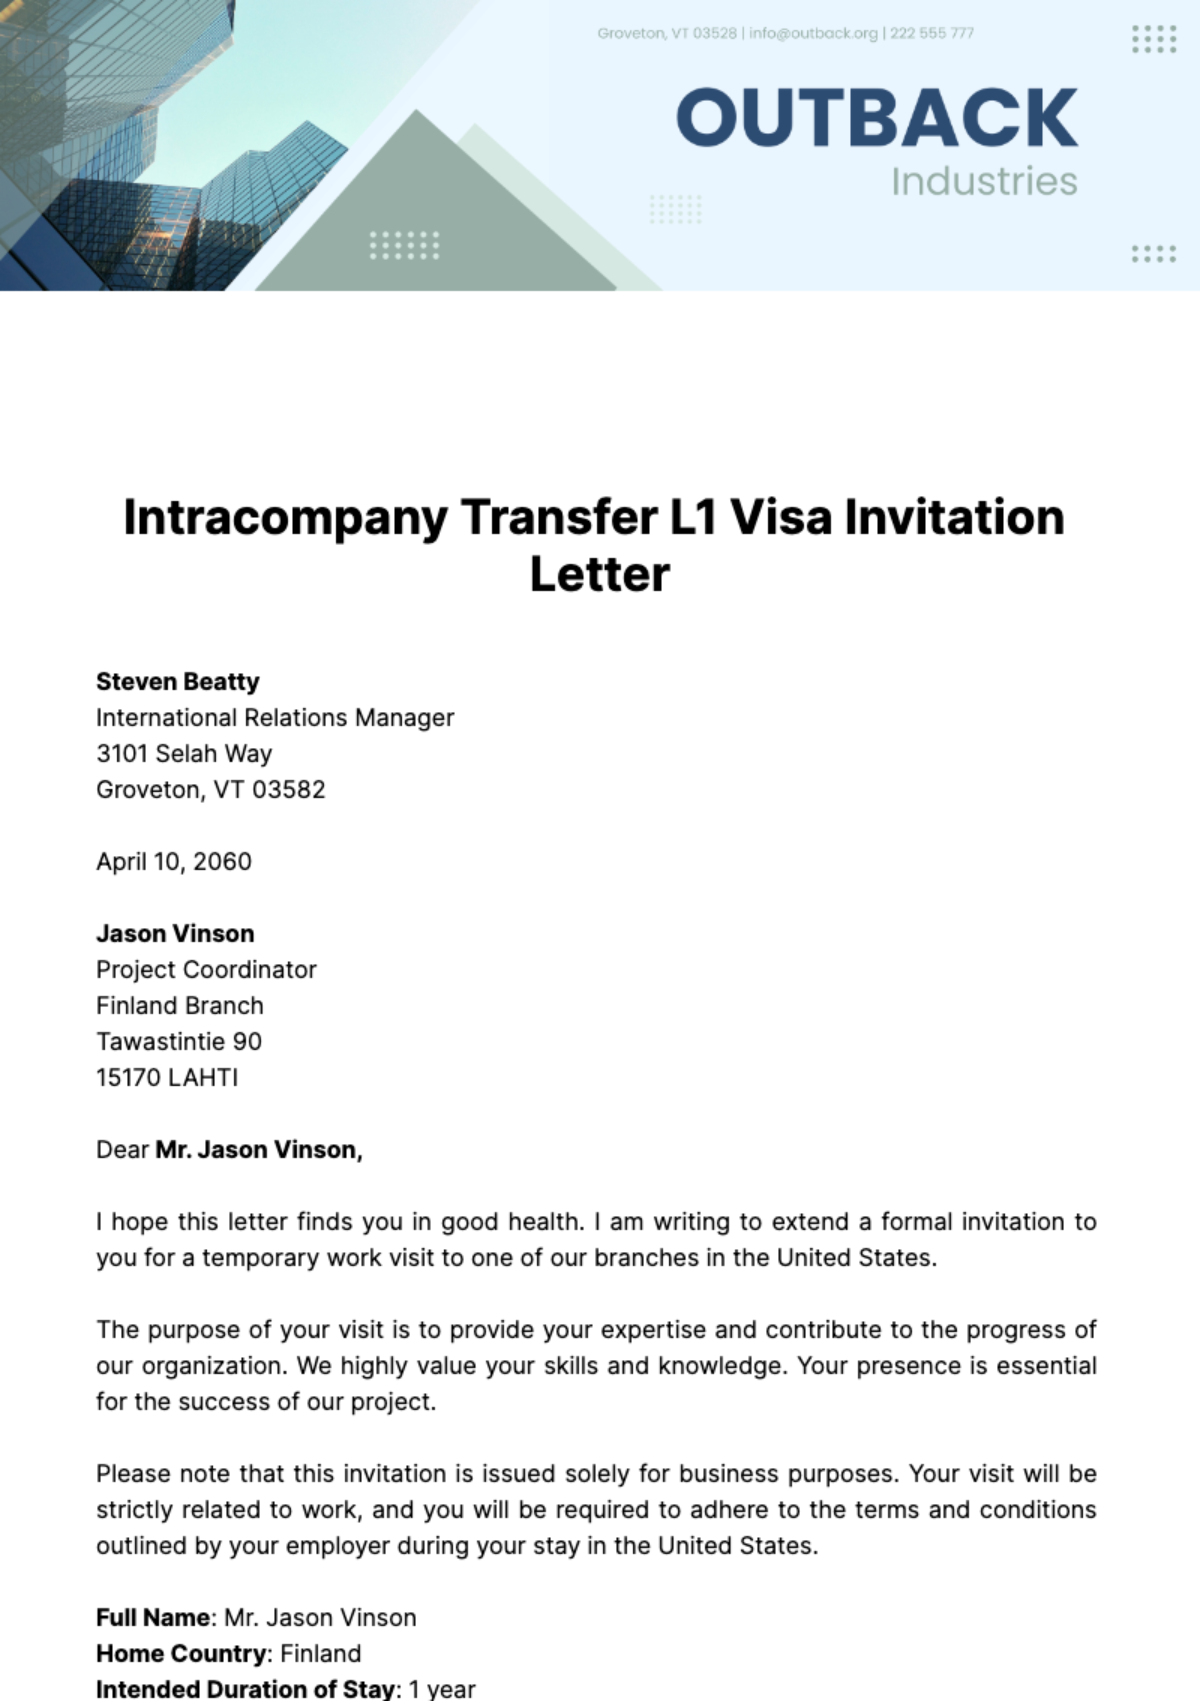 Intracompany Transfer L1 Visa Invitation Letter Template